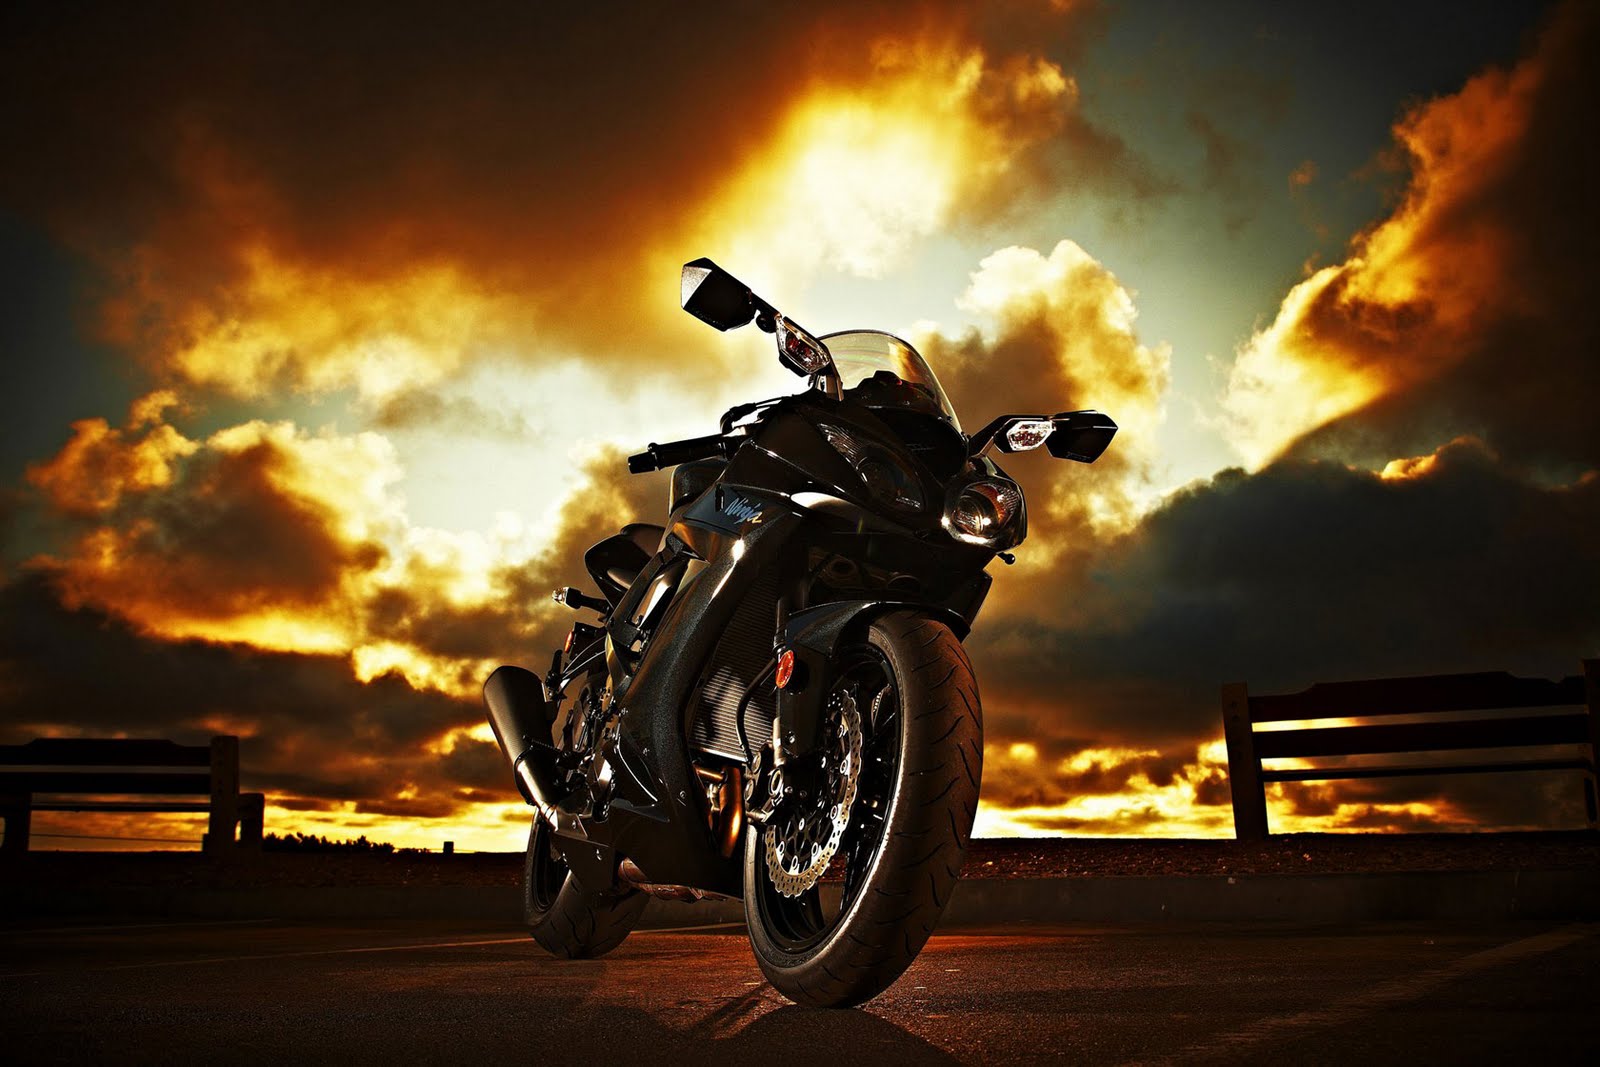 wallpaper motor ninja,motorcycle,stunt performer,vehicle,motorcycling,explosion